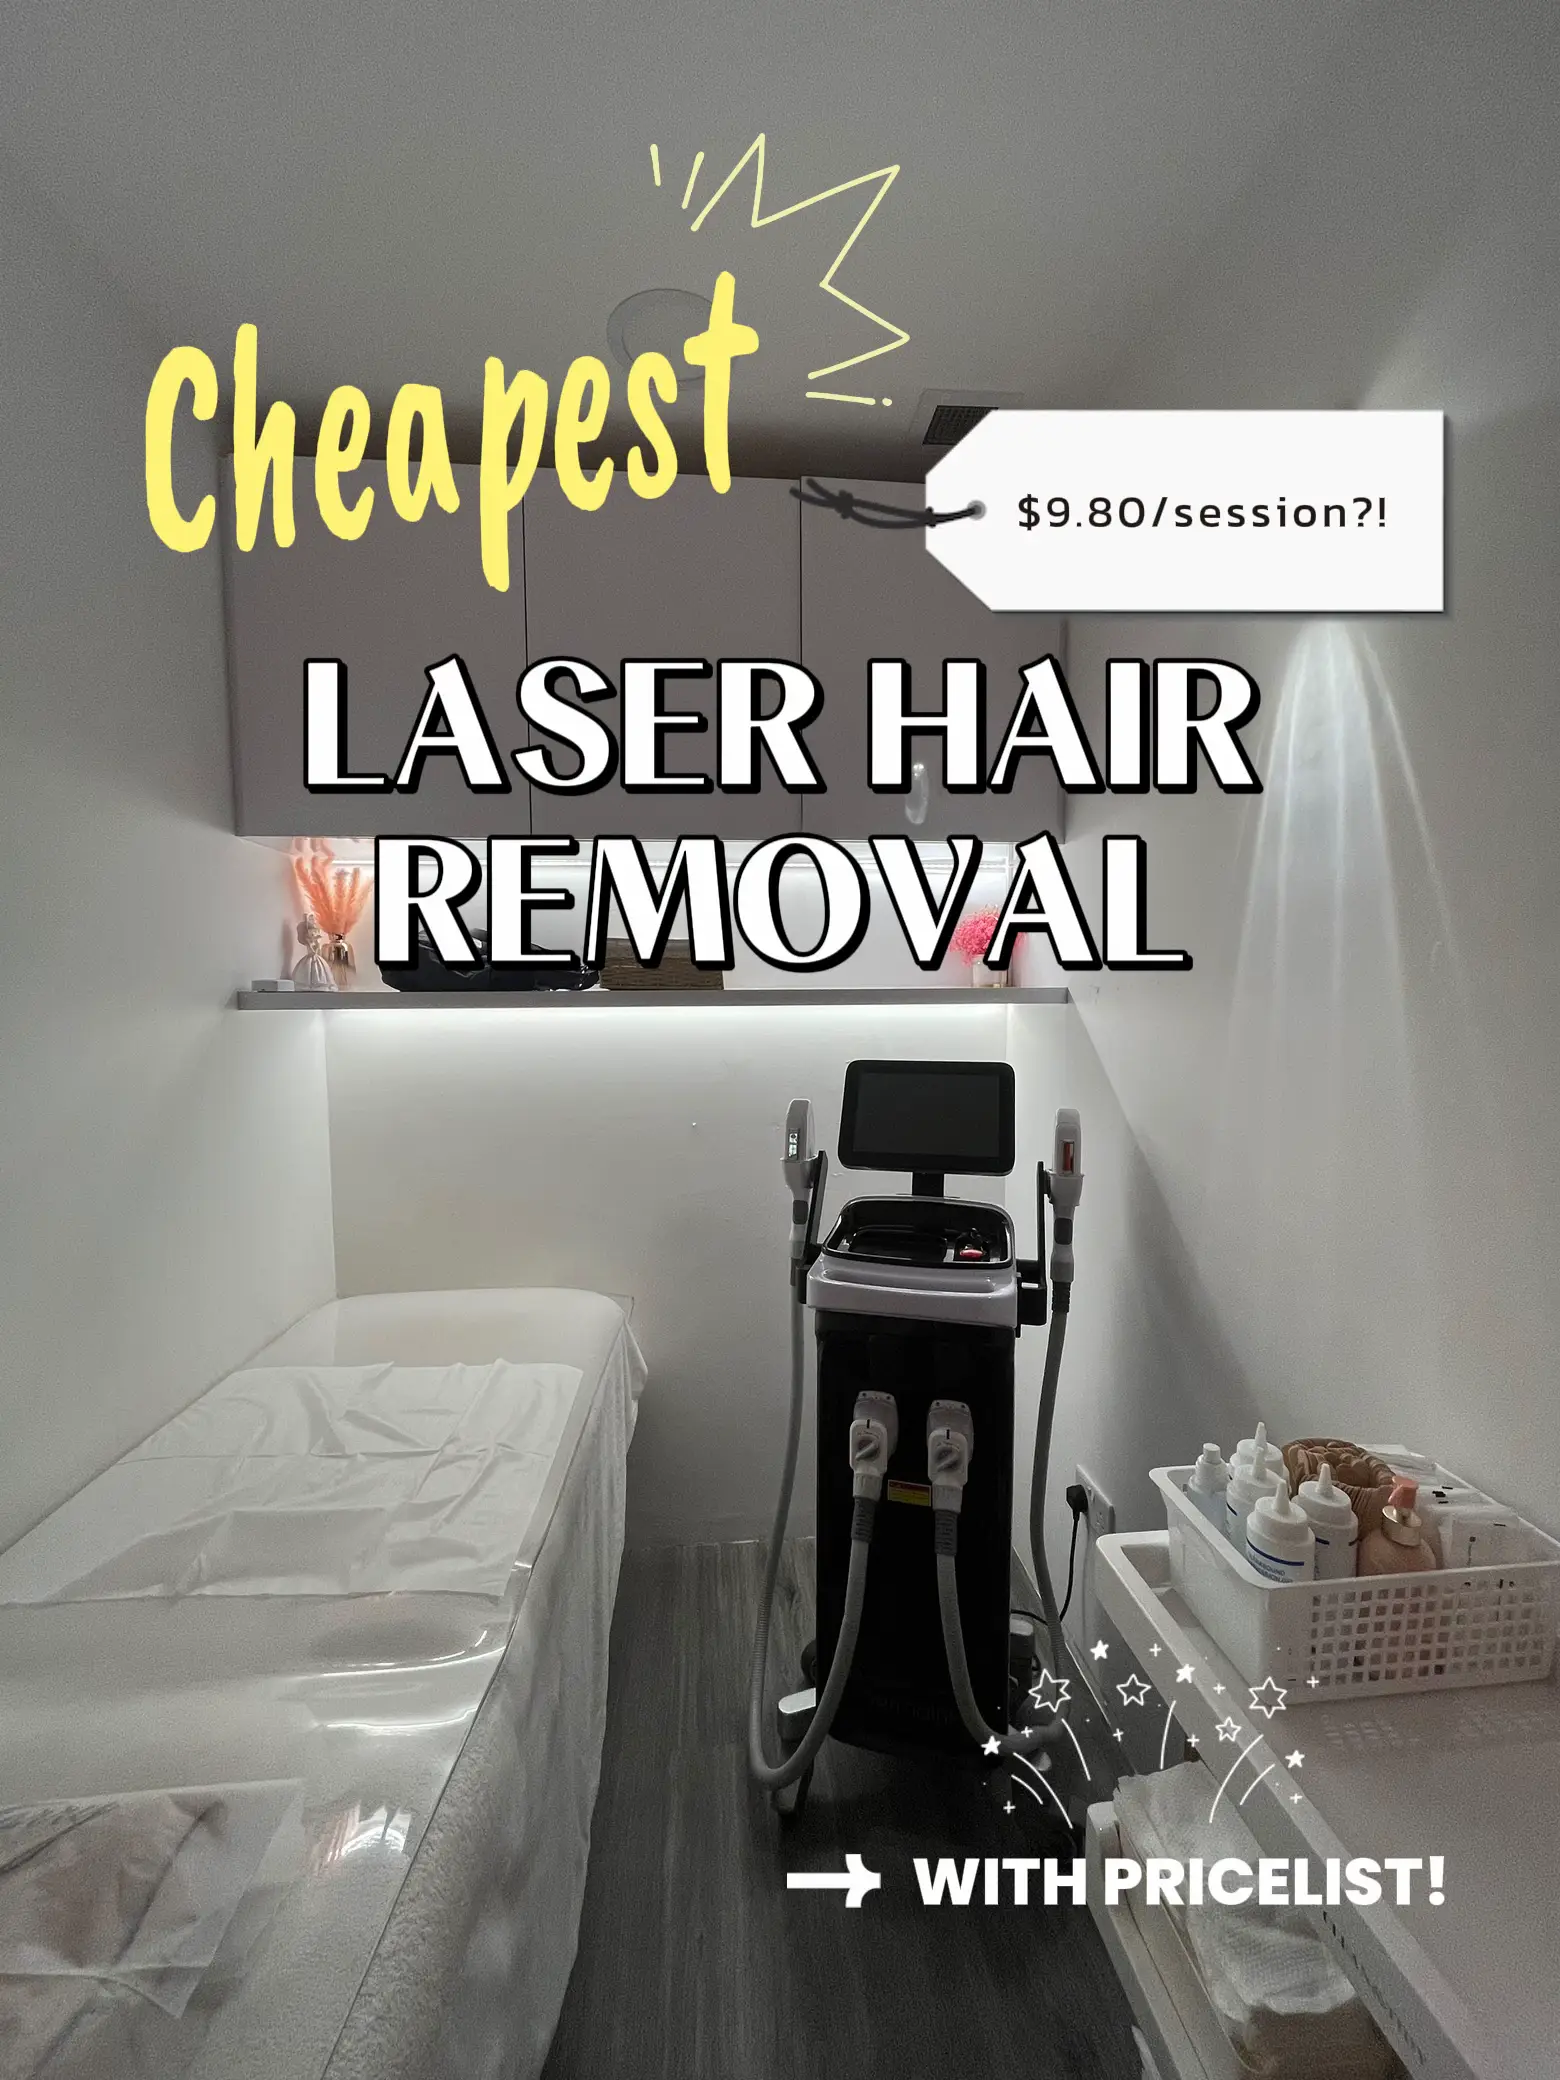 IPL Hair Removal - Singapore